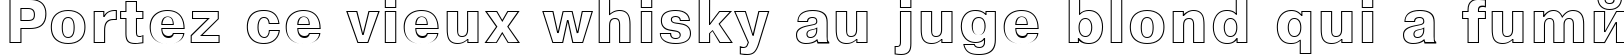 Пример написания шрифтом NTOutline текста на французском